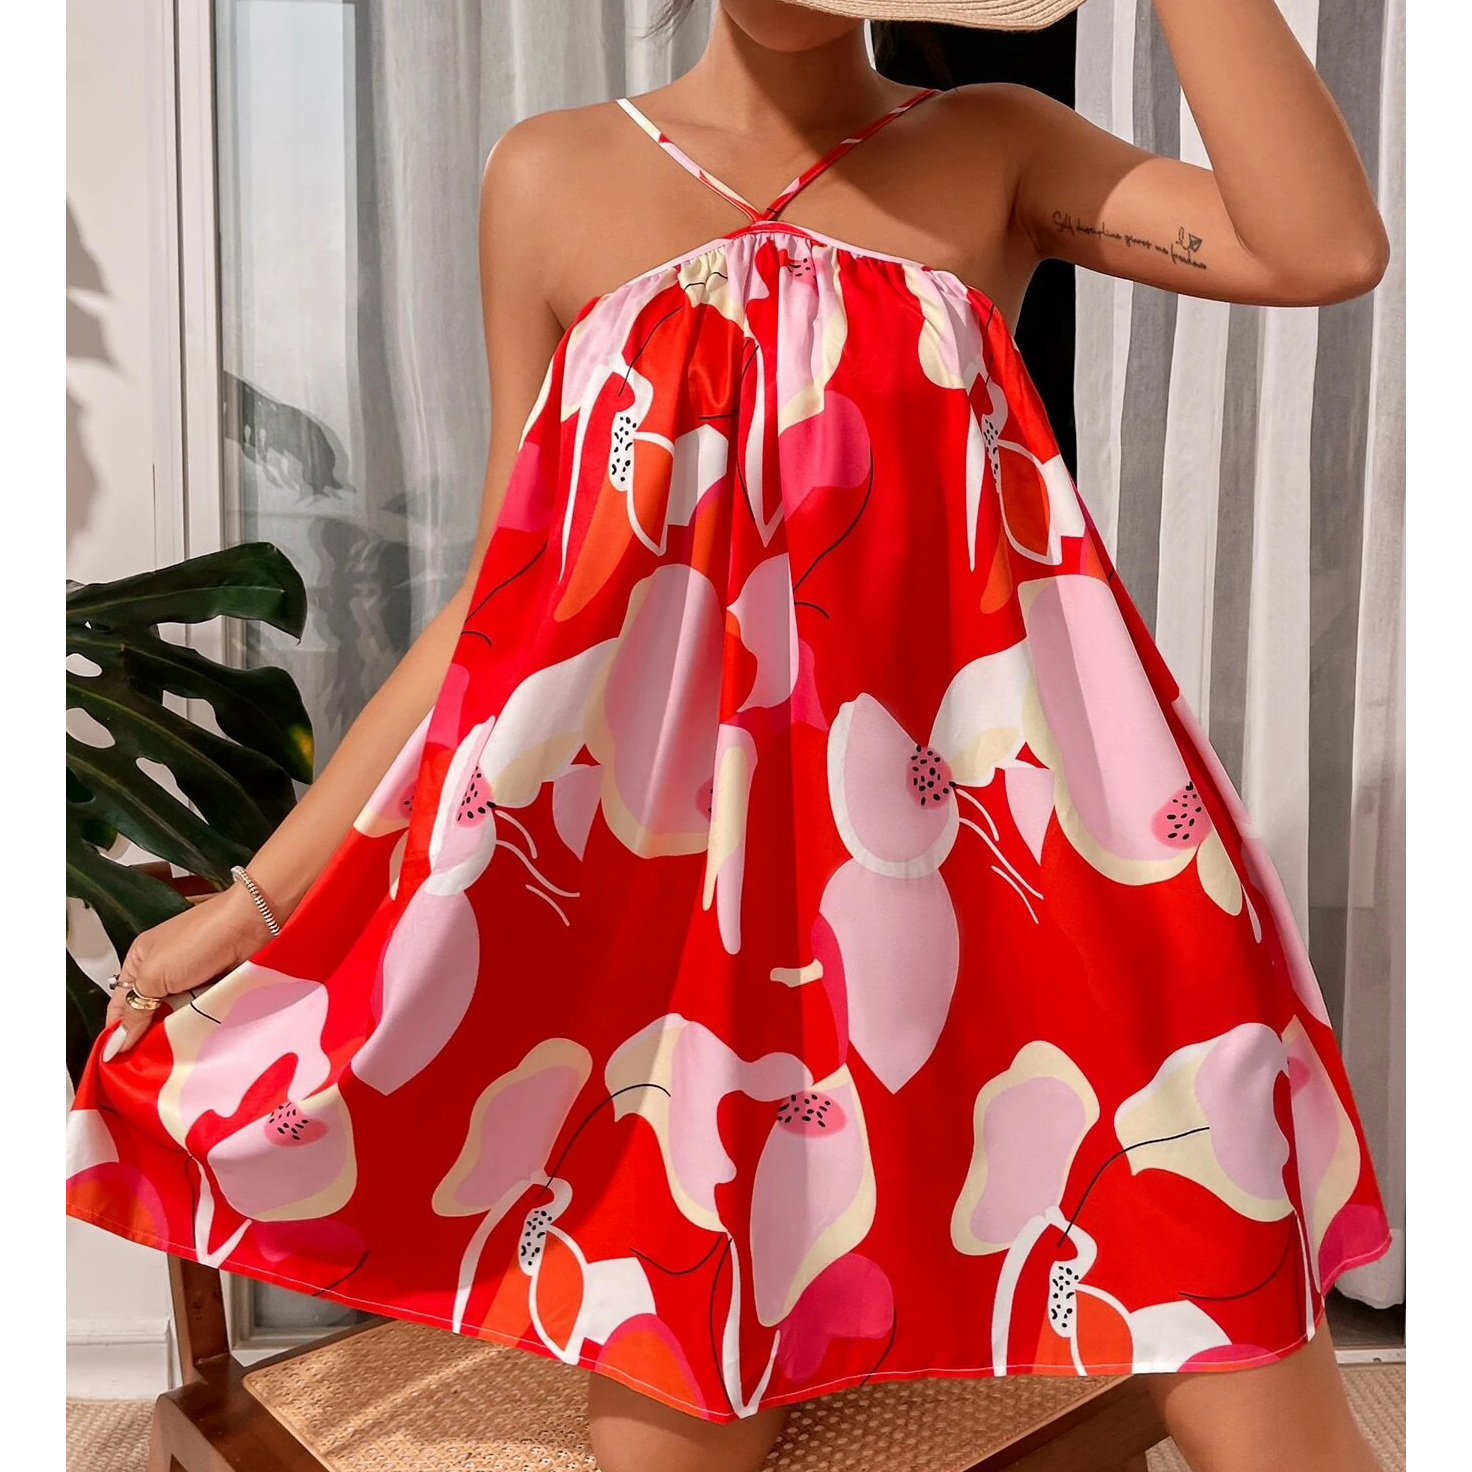 Allover Print Cami Dress - Multicolor, Large(8/10)